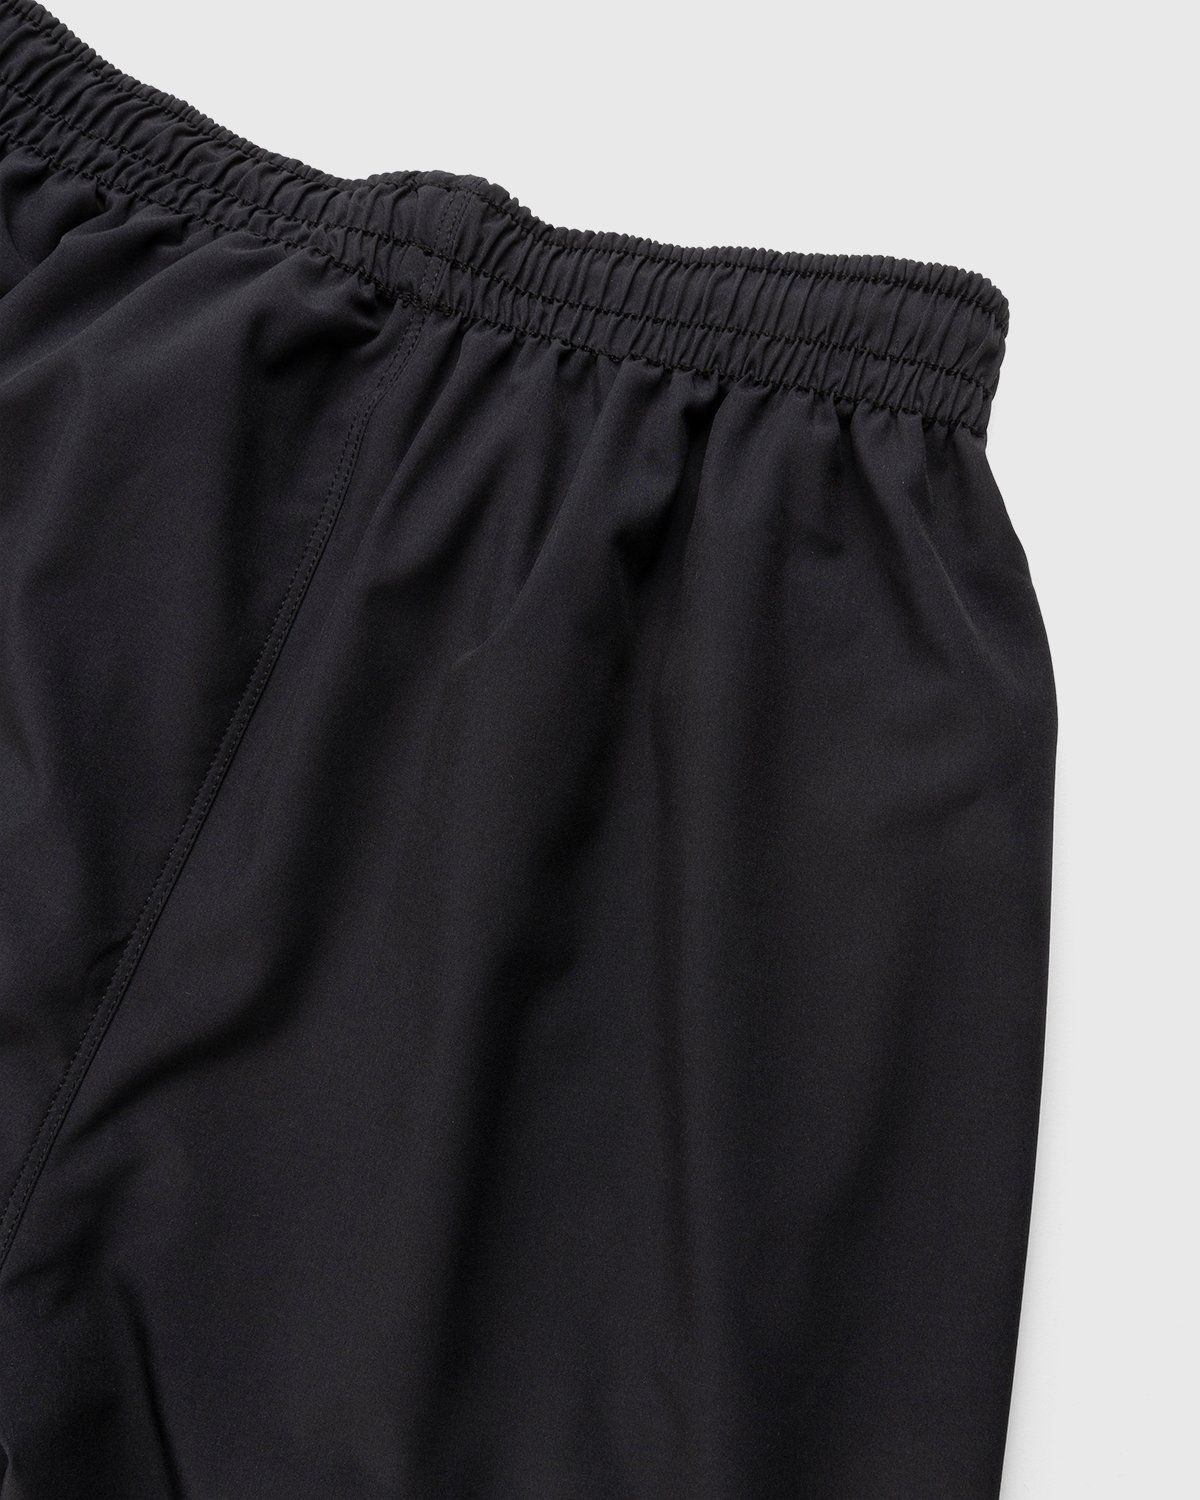 Highsnobiety – HS Sports Reversible Mesh Shorts Black/Khaki - Shorts - Green - Image 5